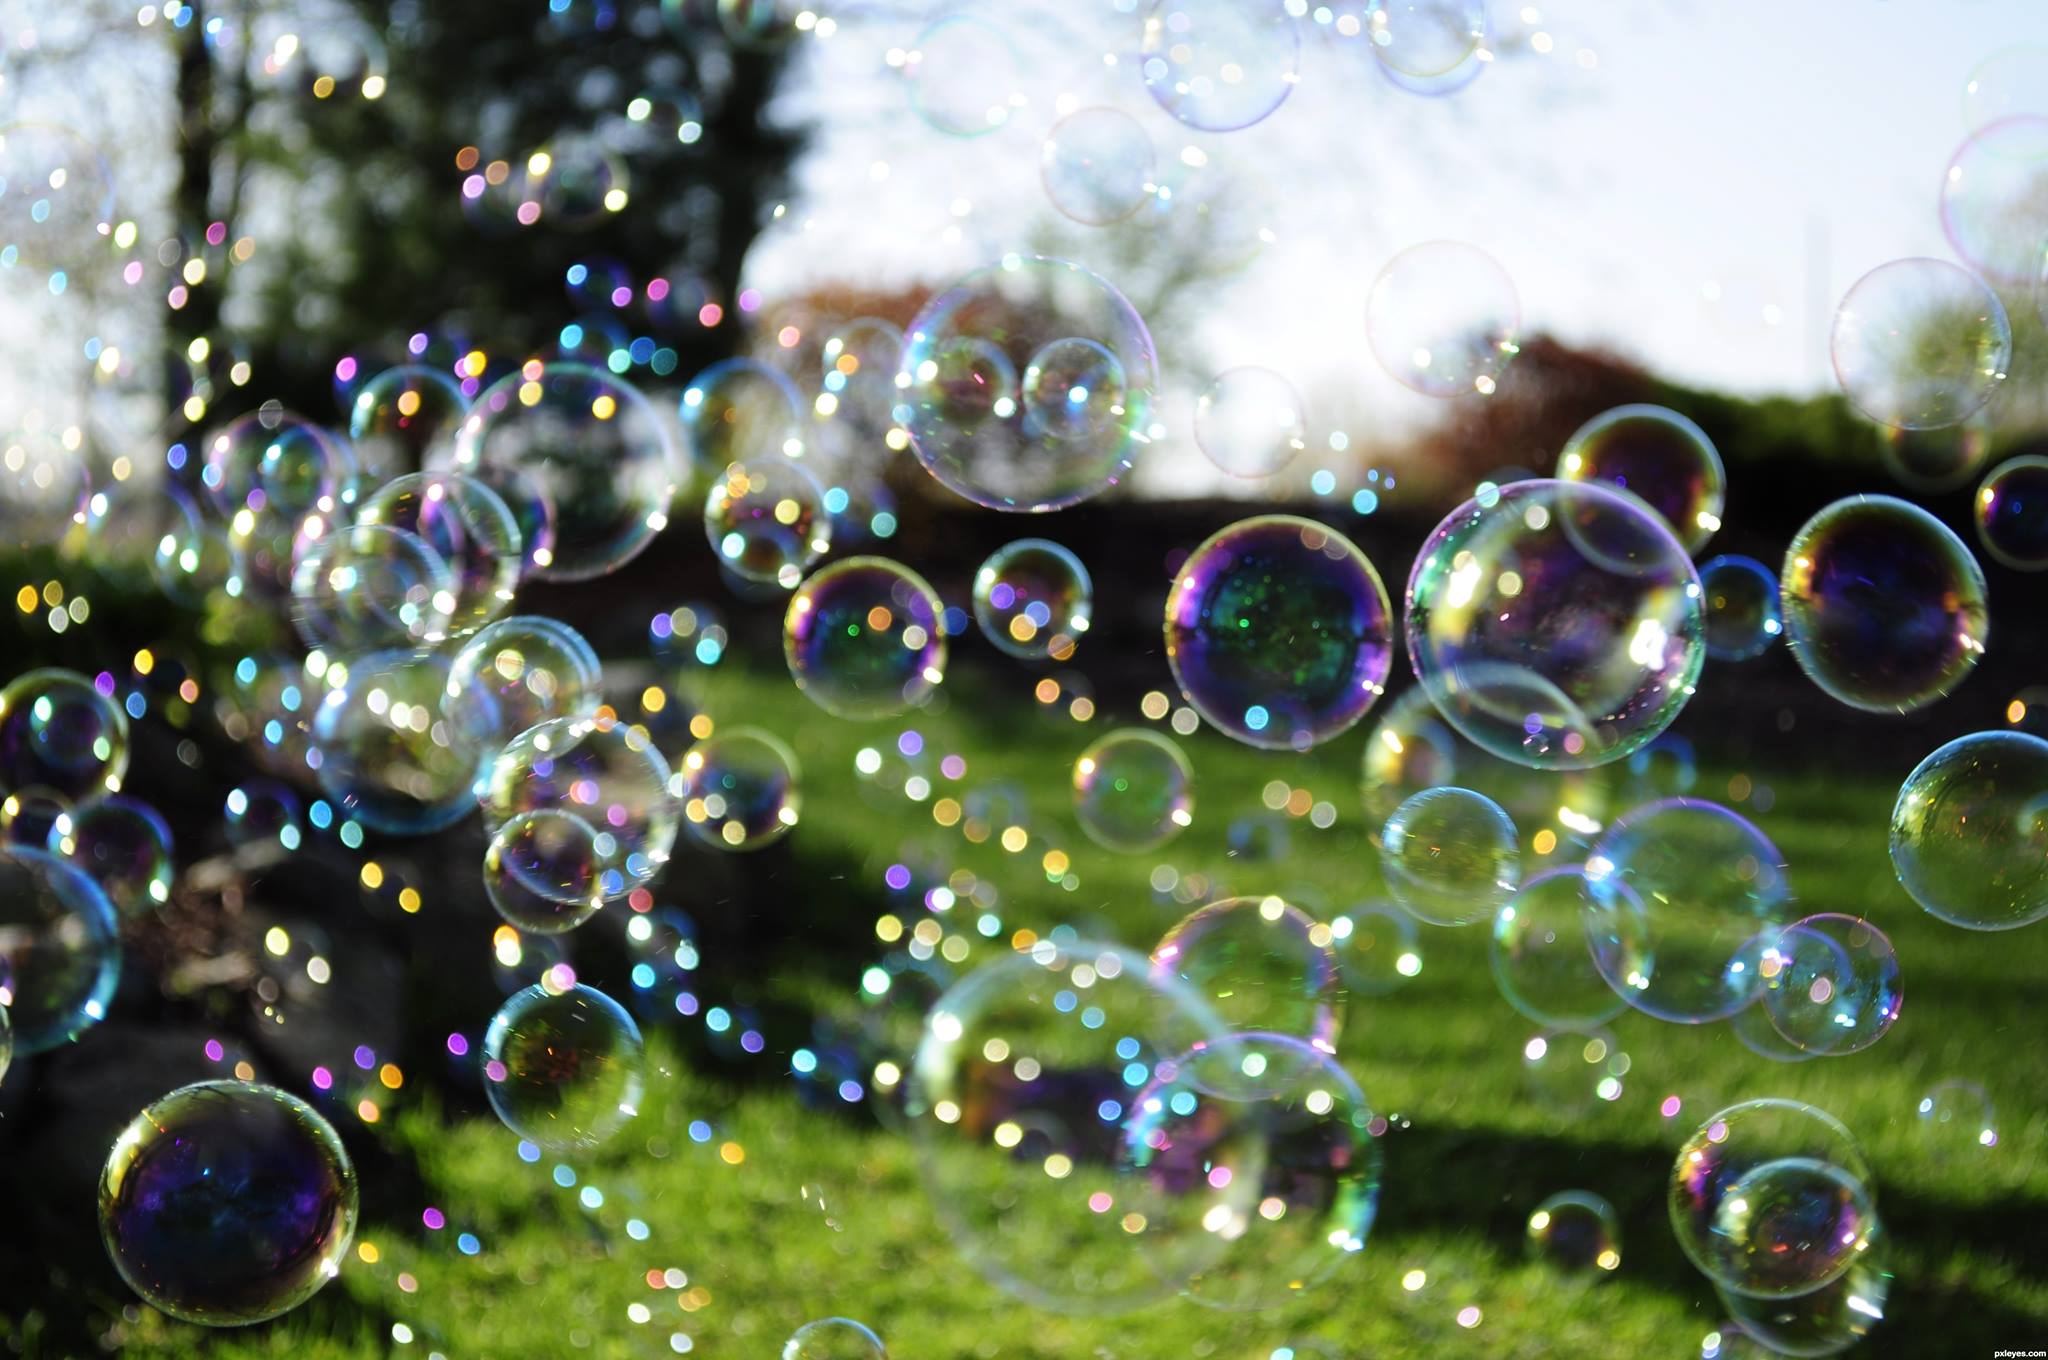 Billion Bubble Party in Washington Square Park